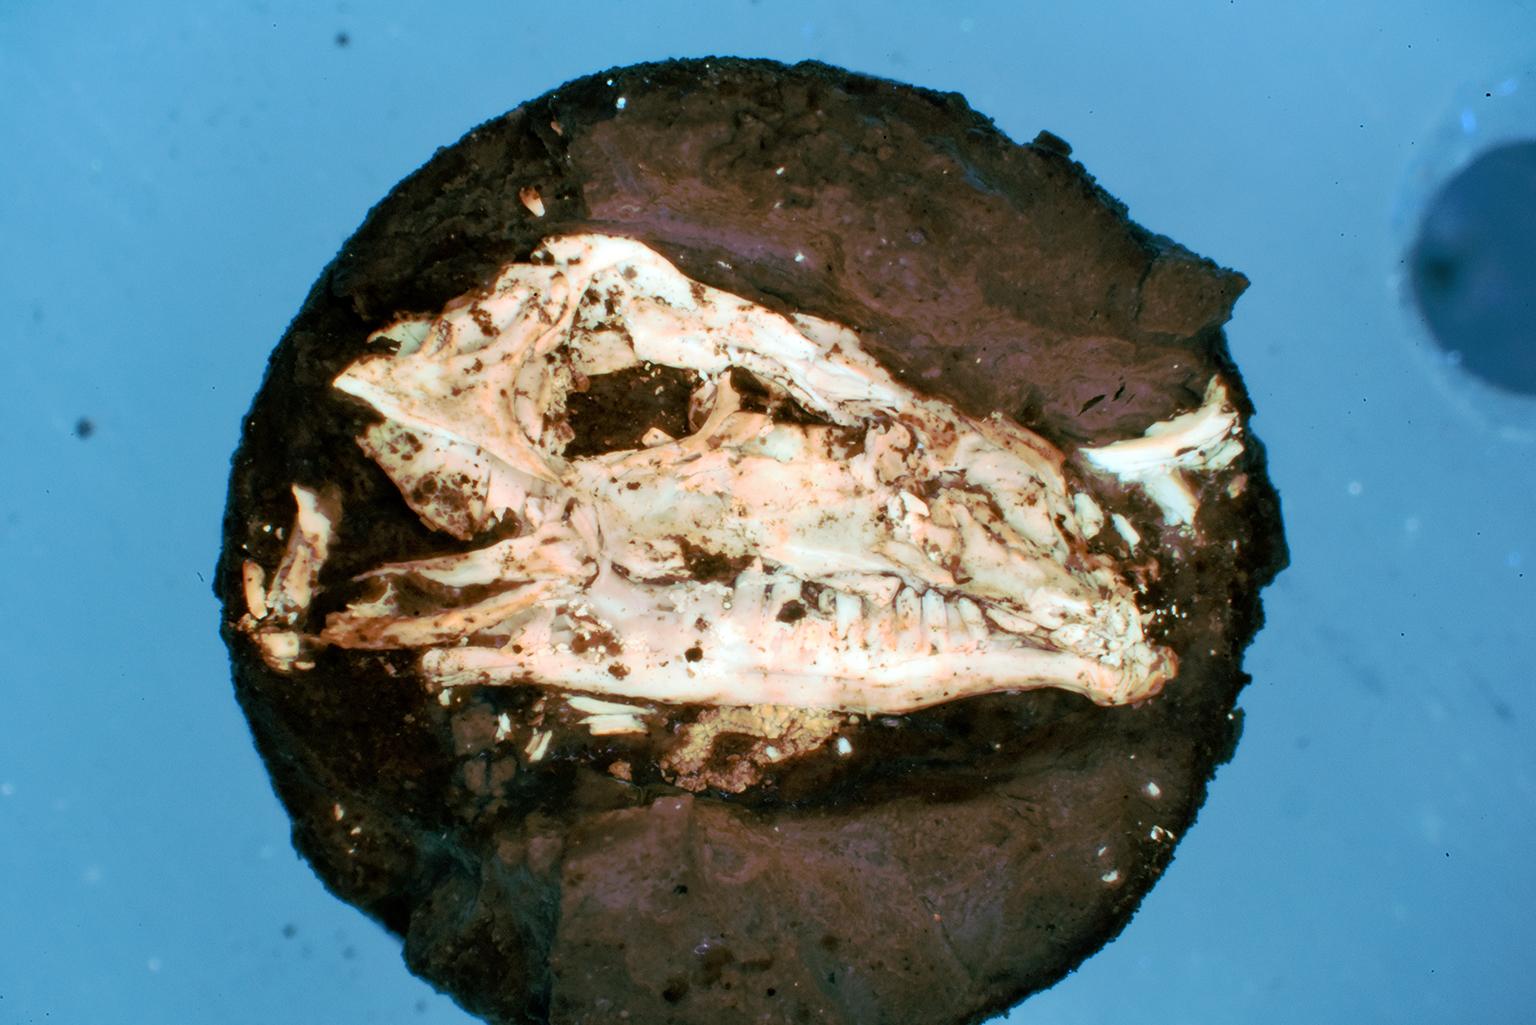 A synthetically fossilized lizard head created by Field Museum researcher Evan Saitta. (Evan Saitta / Field Museum)